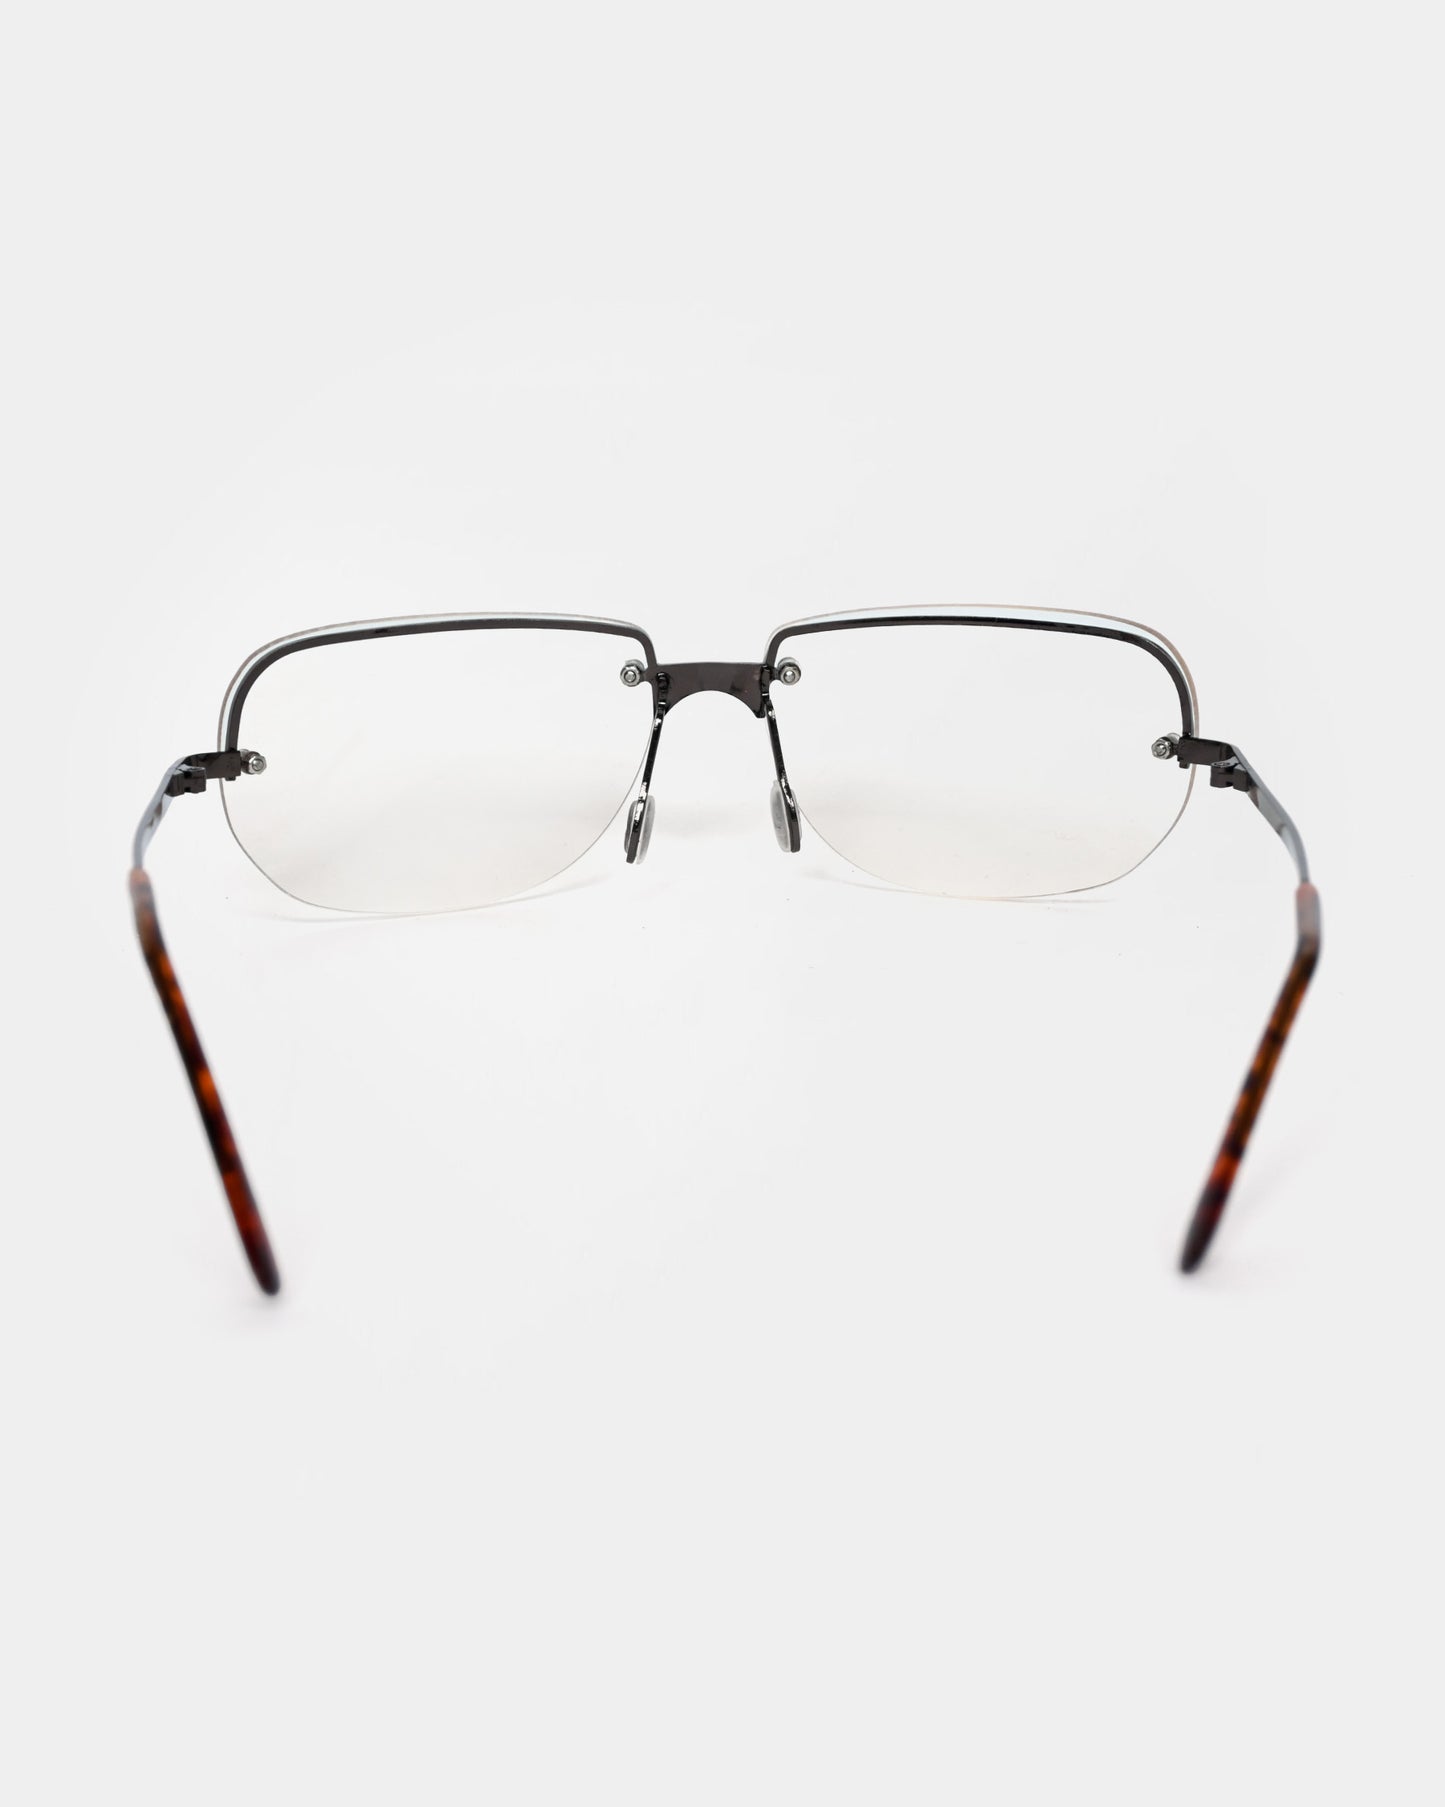 NOS 90s Clear Frameless Sunglasses - Brown